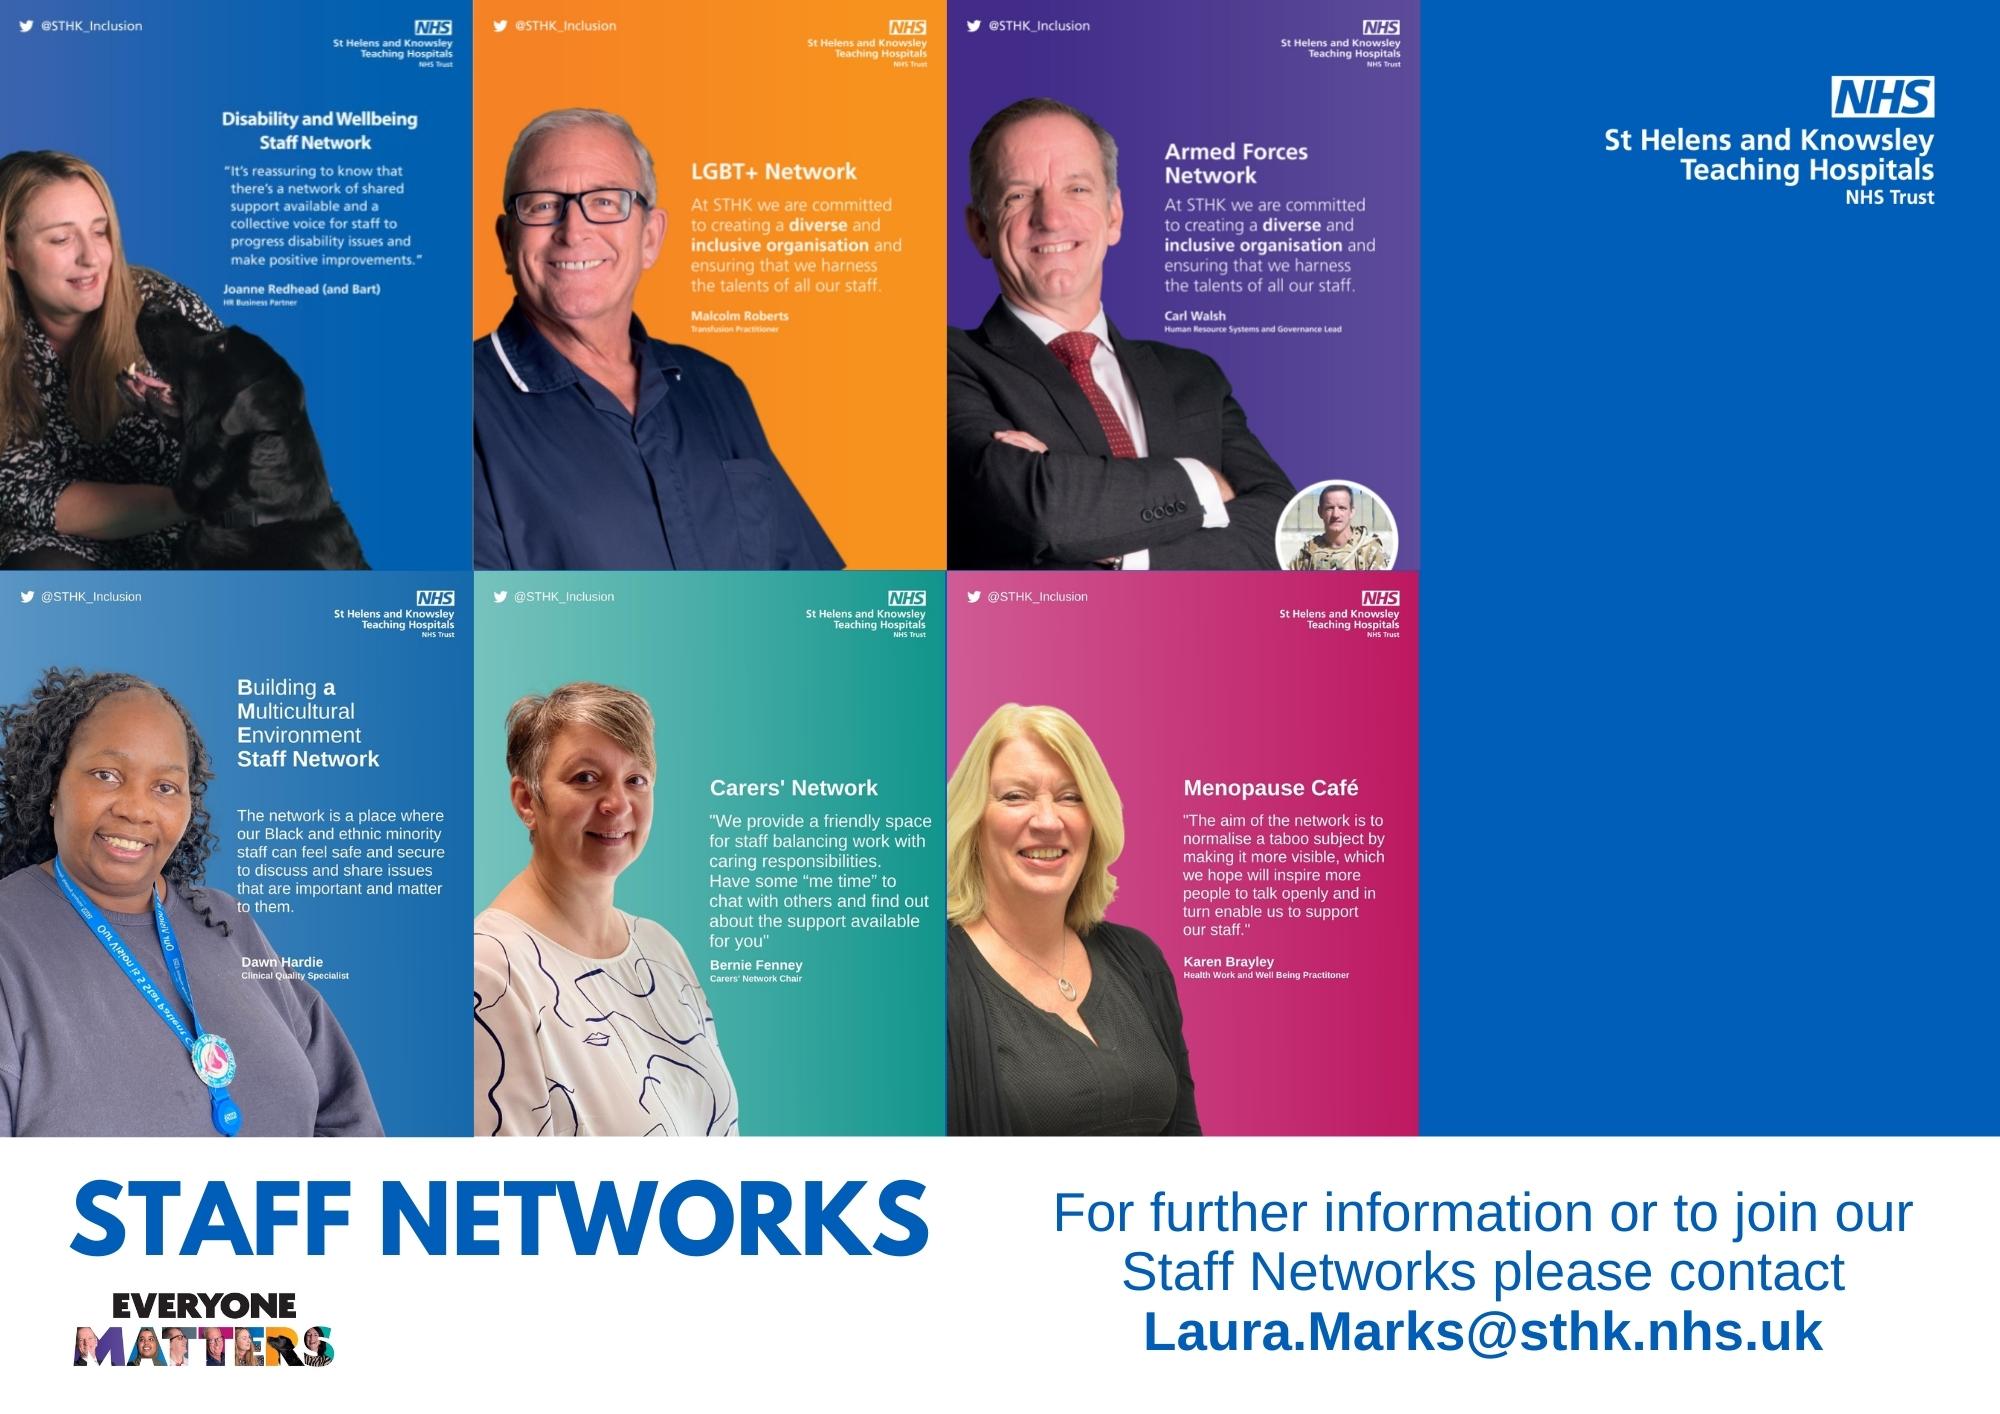 Staff Networks